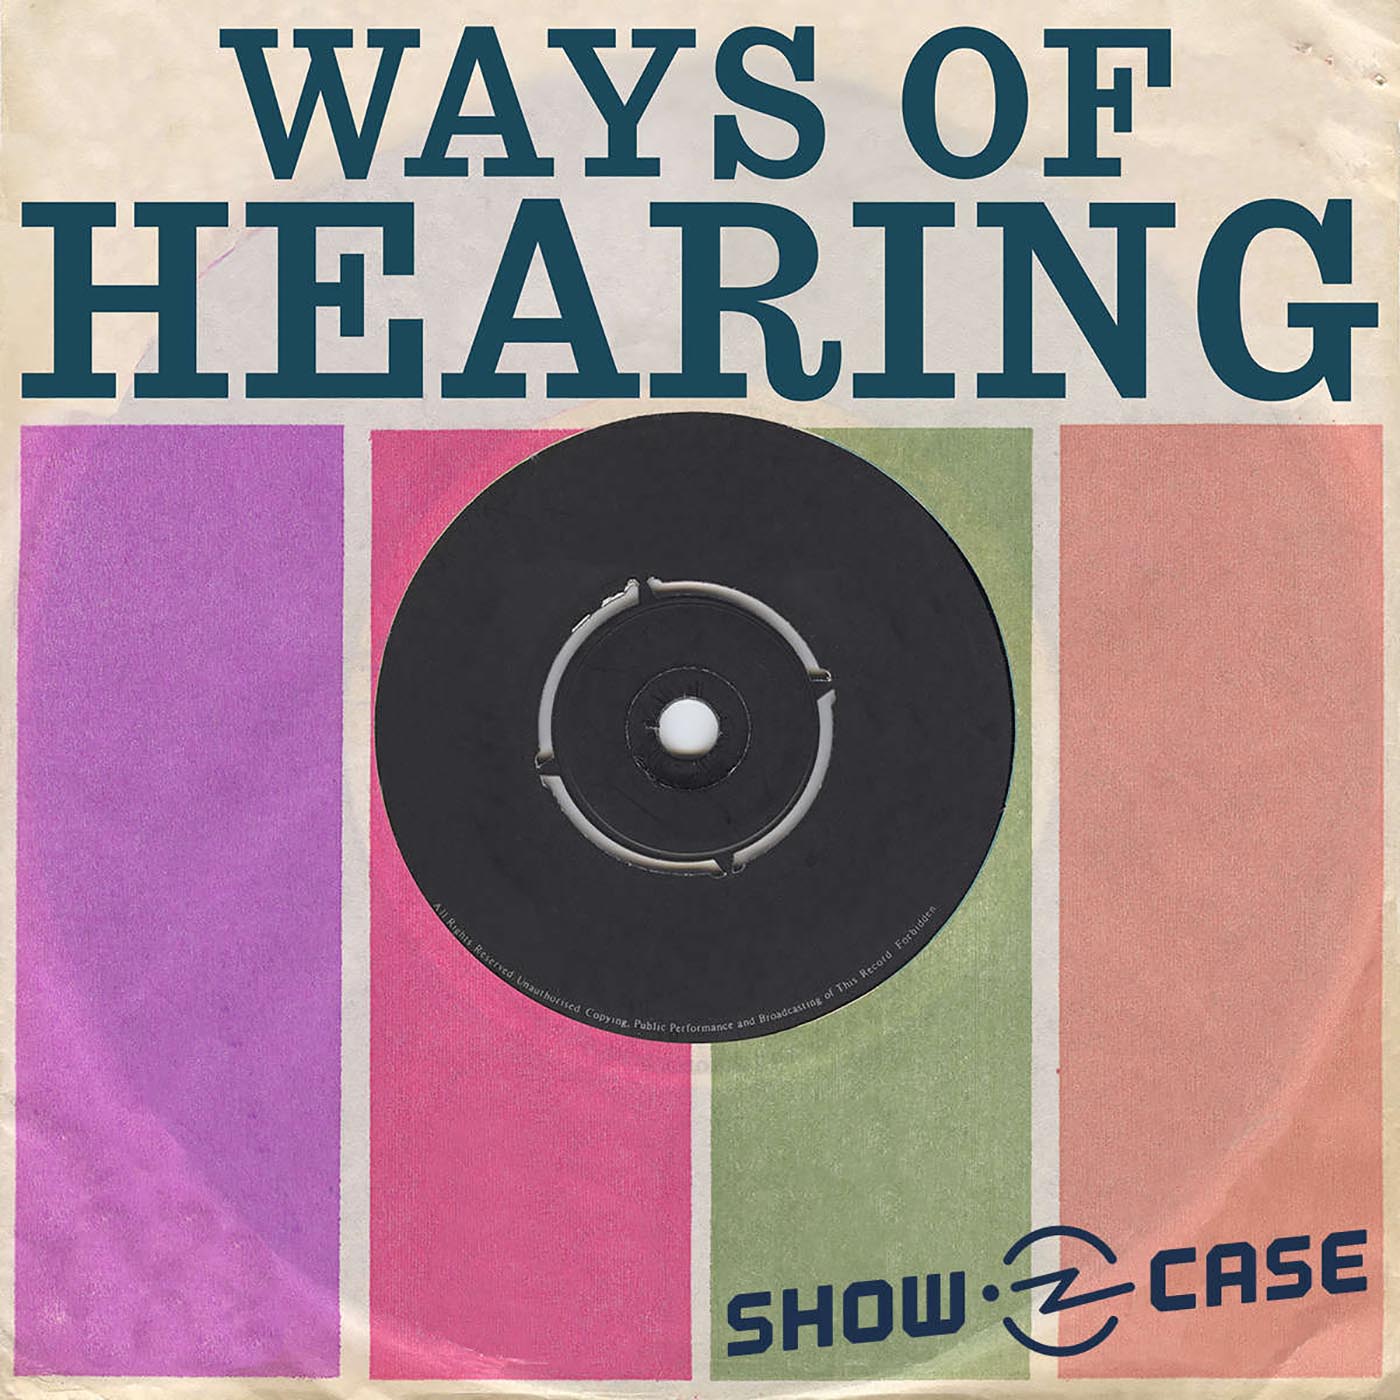 Ways of Hearing #4 – MONEY